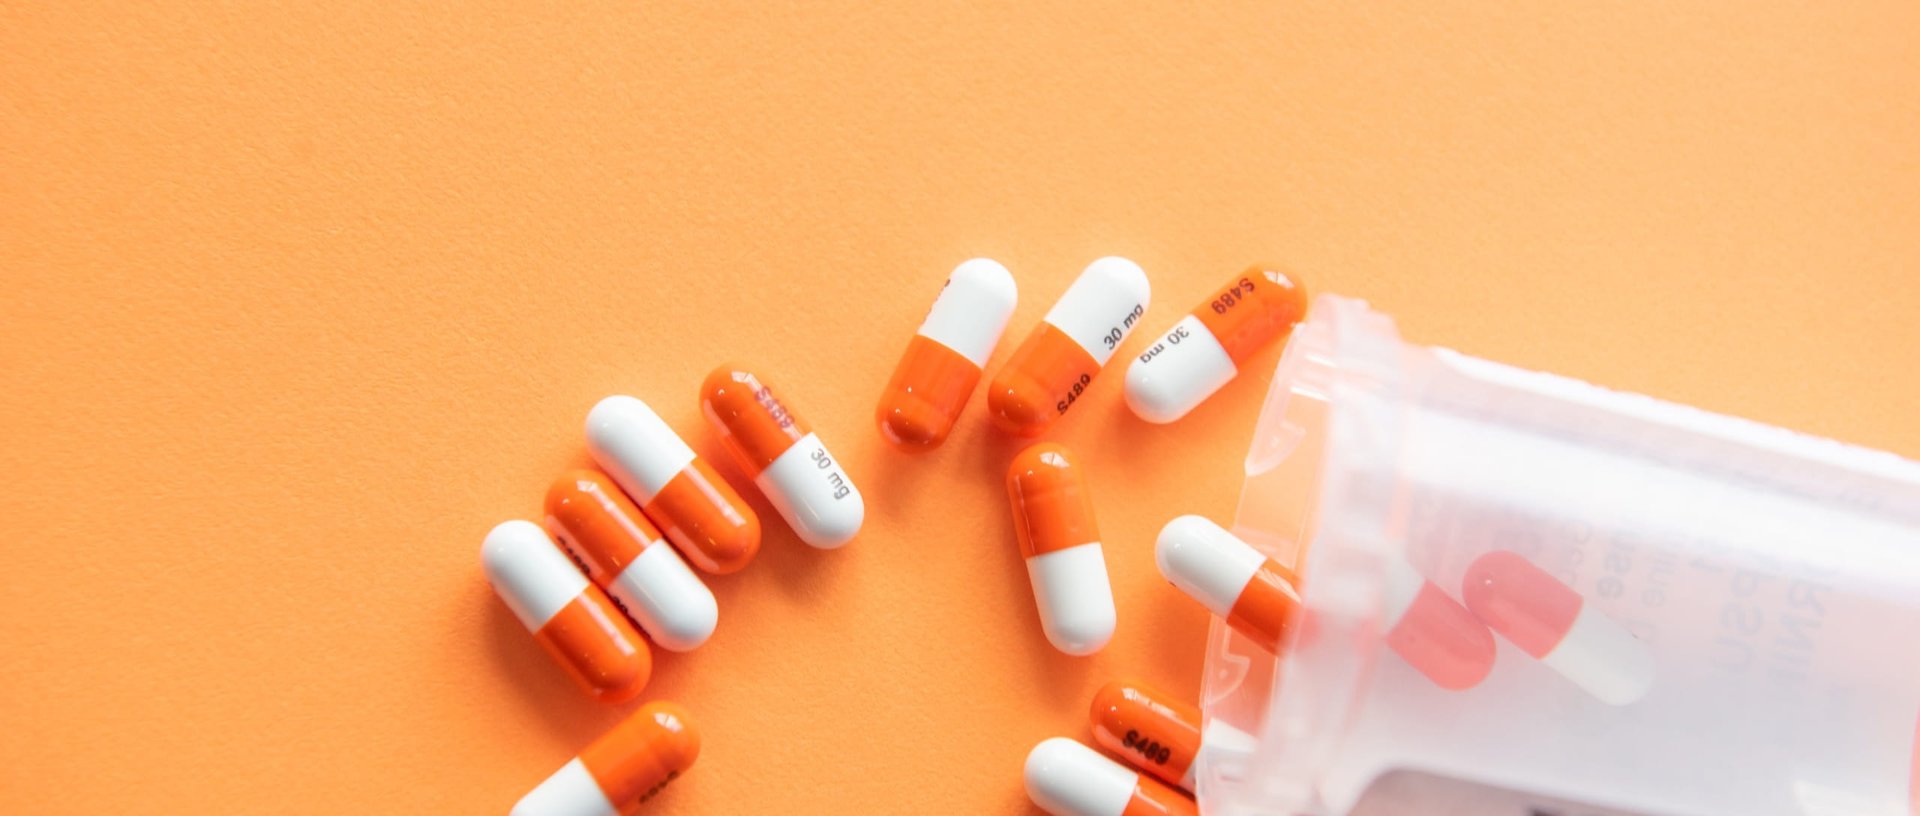 Pharma drugs and pills on a orange background